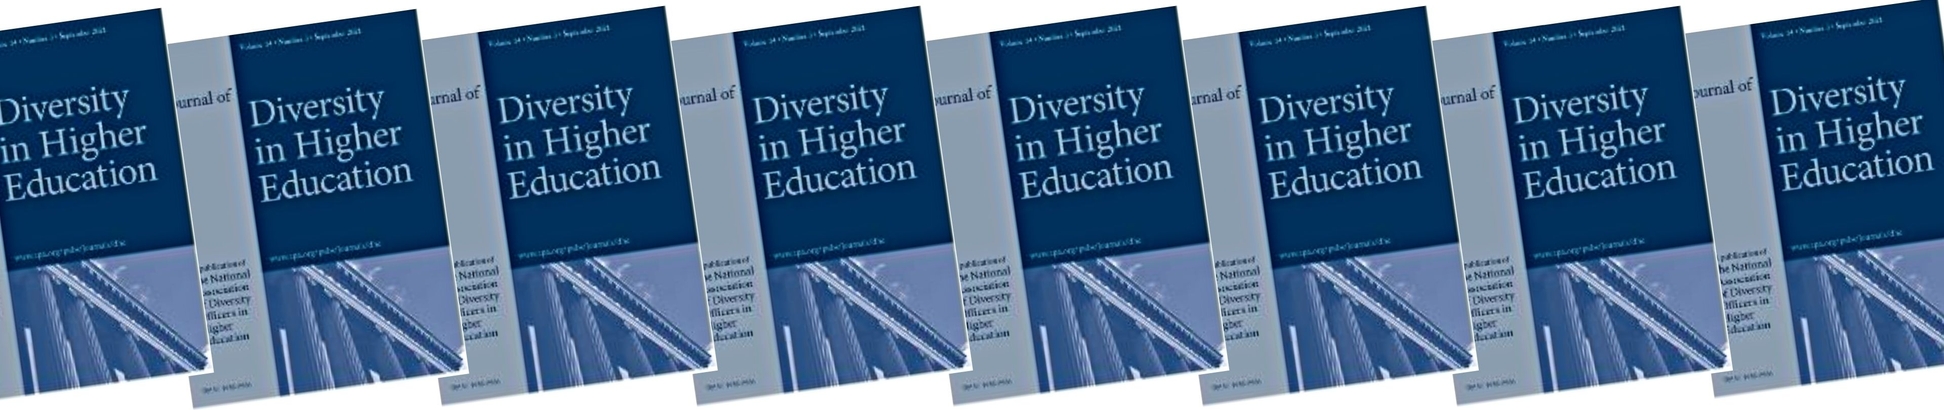 Journal of Diversity in Higher Education